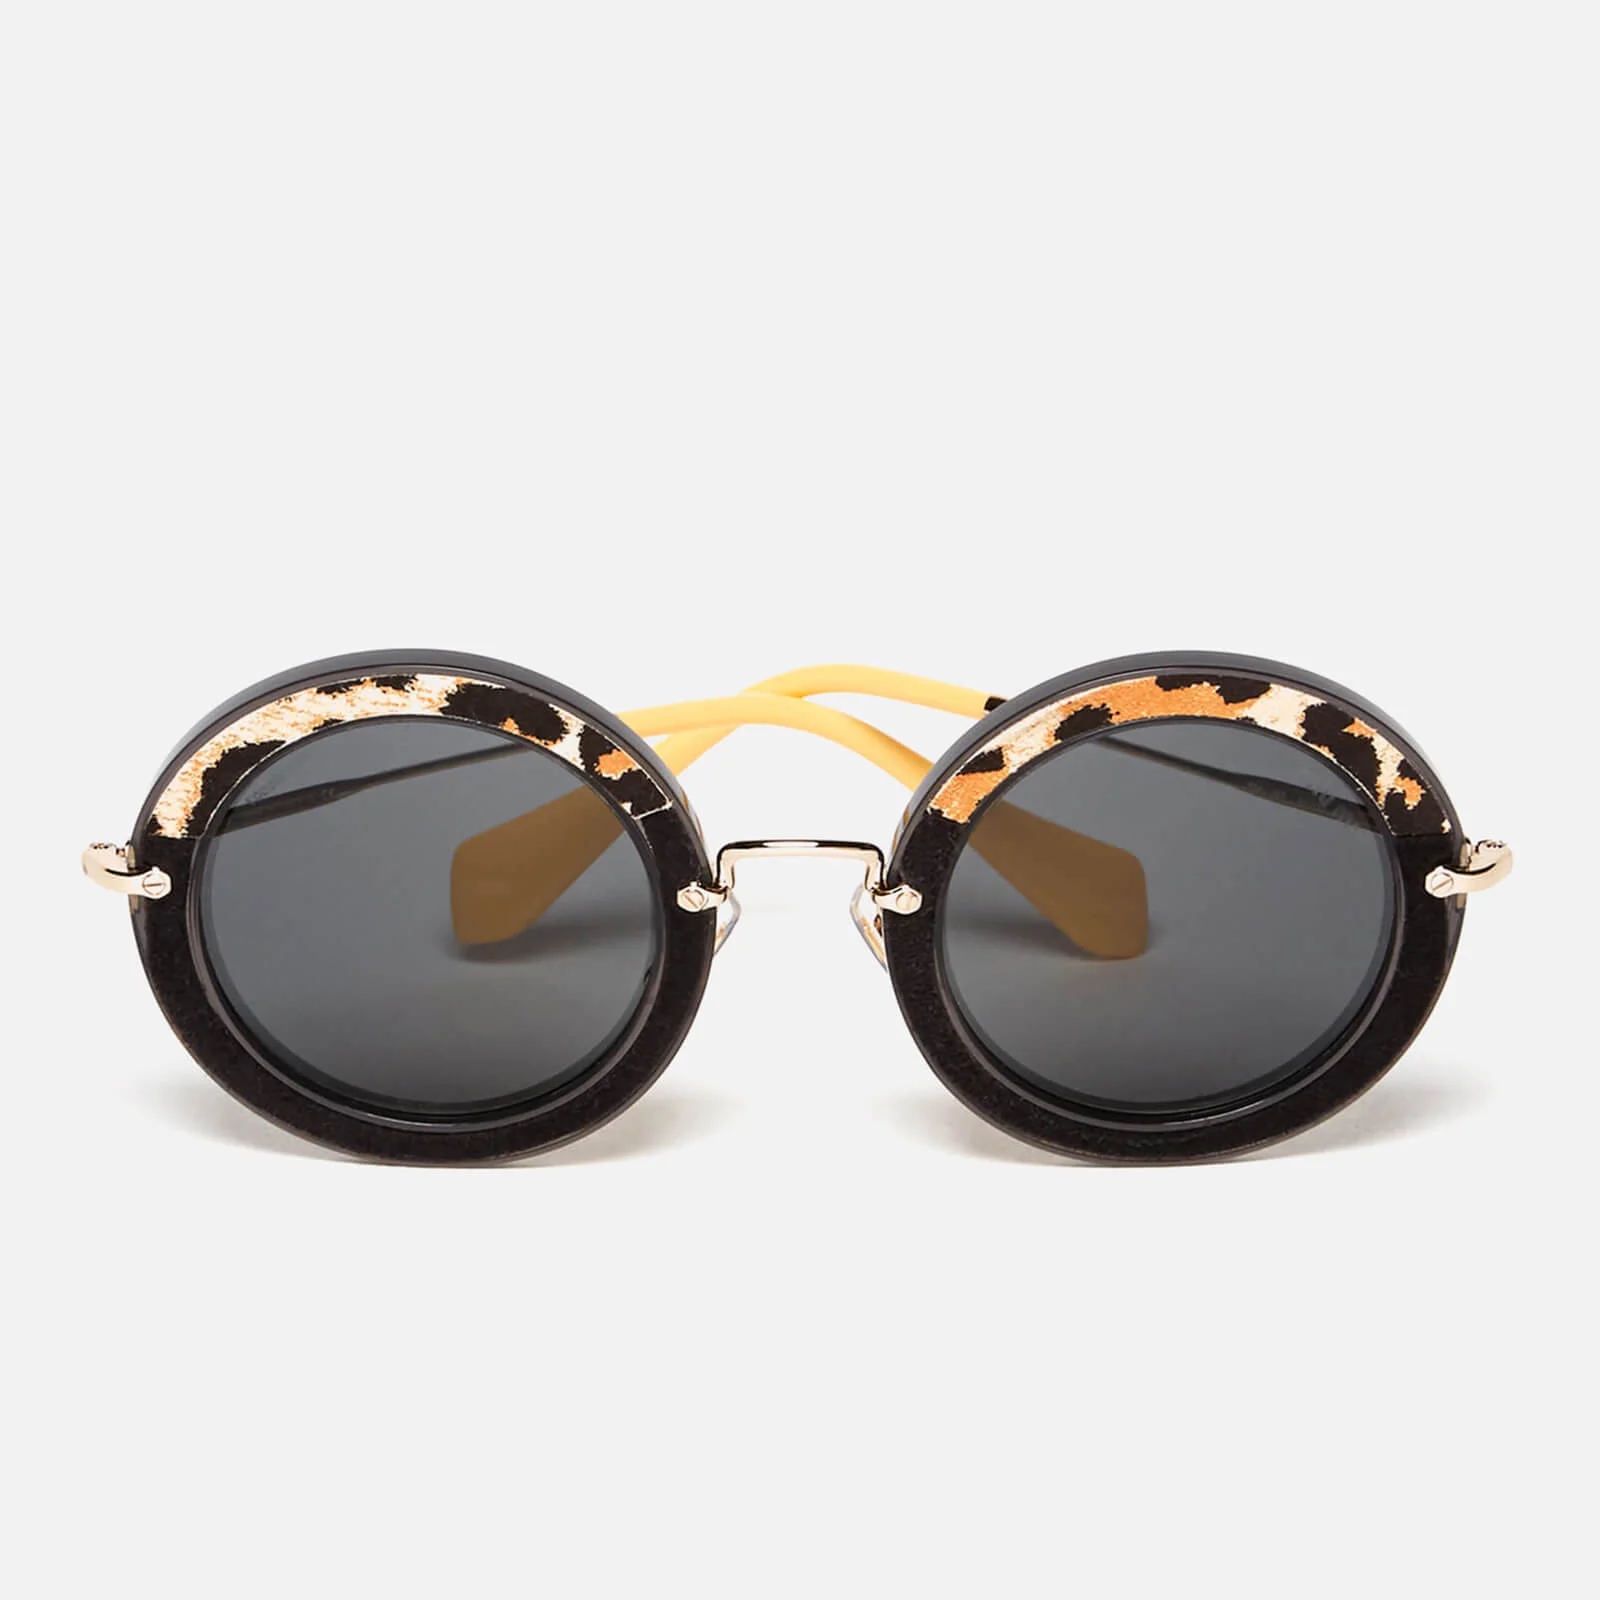 Miu Miu Women's Round Oversized Sunglasses - Transparent Grey Image 1